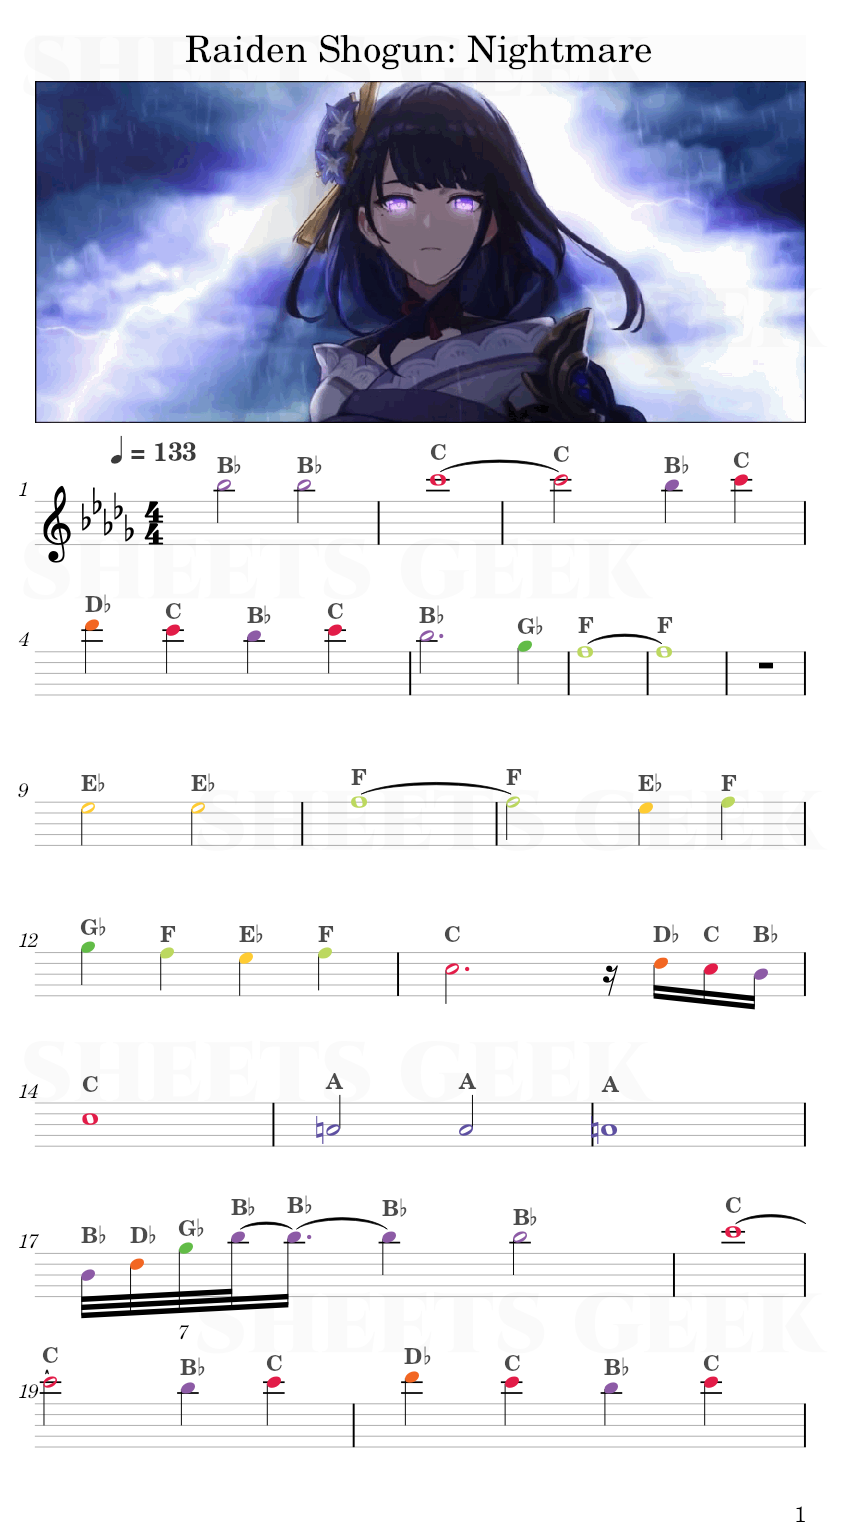 Raiden Shogun: Nightmare Teaser - Yu-Peng Chen baal's theme Easy Sheet Music Free for piano, keyboard, flute, violin, sax, cello page 1